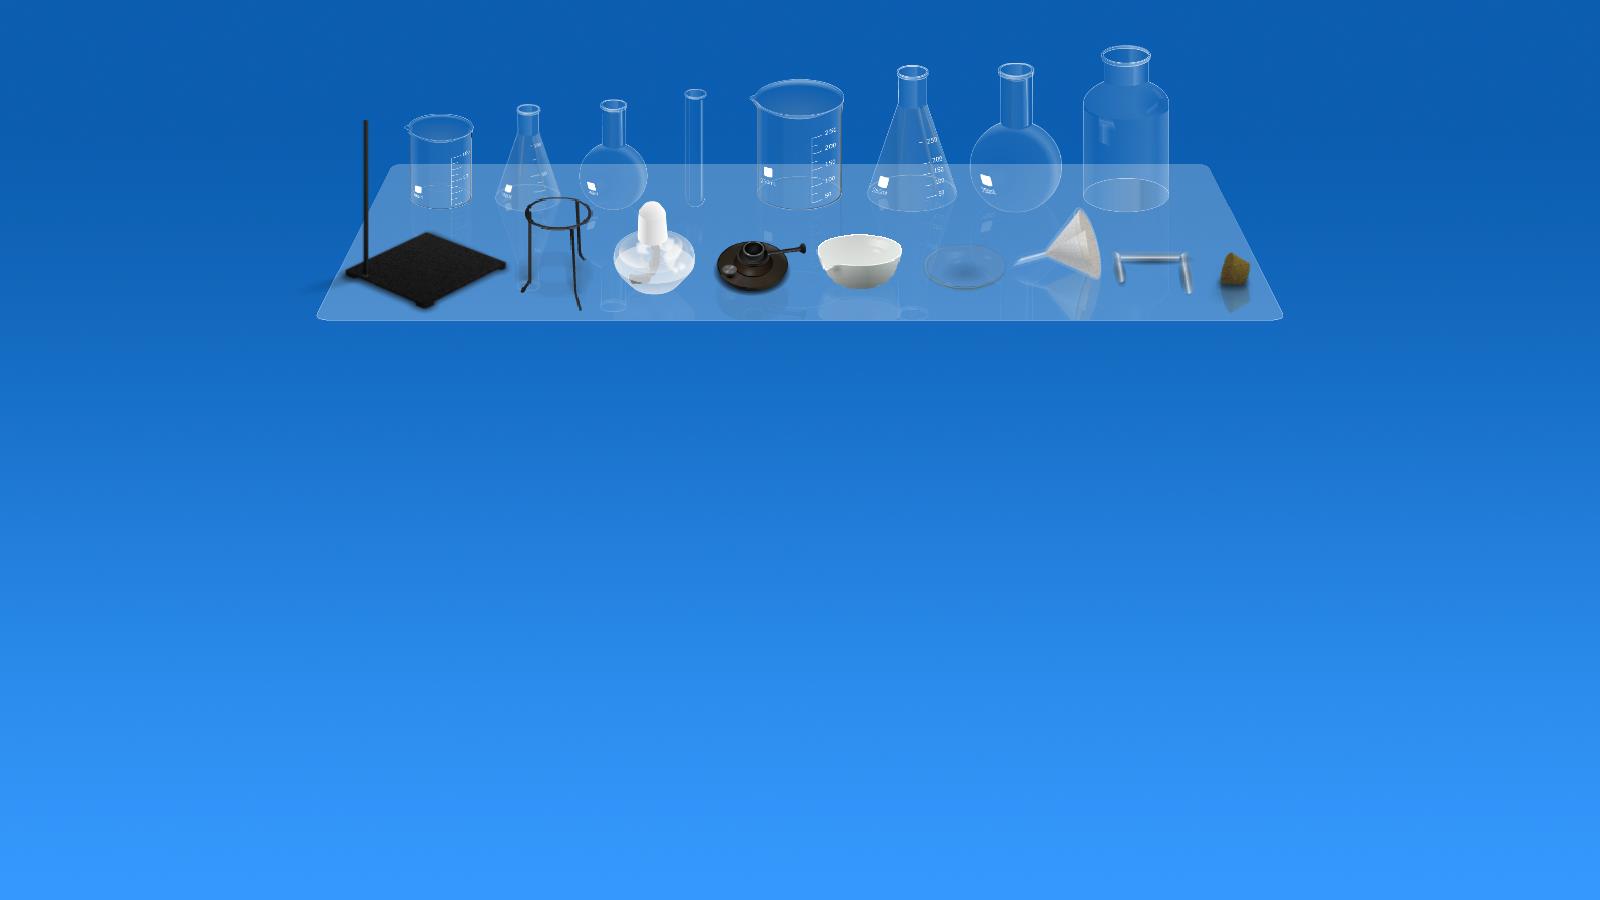 chemist虚拟化学实验室中文版下载5.1.4